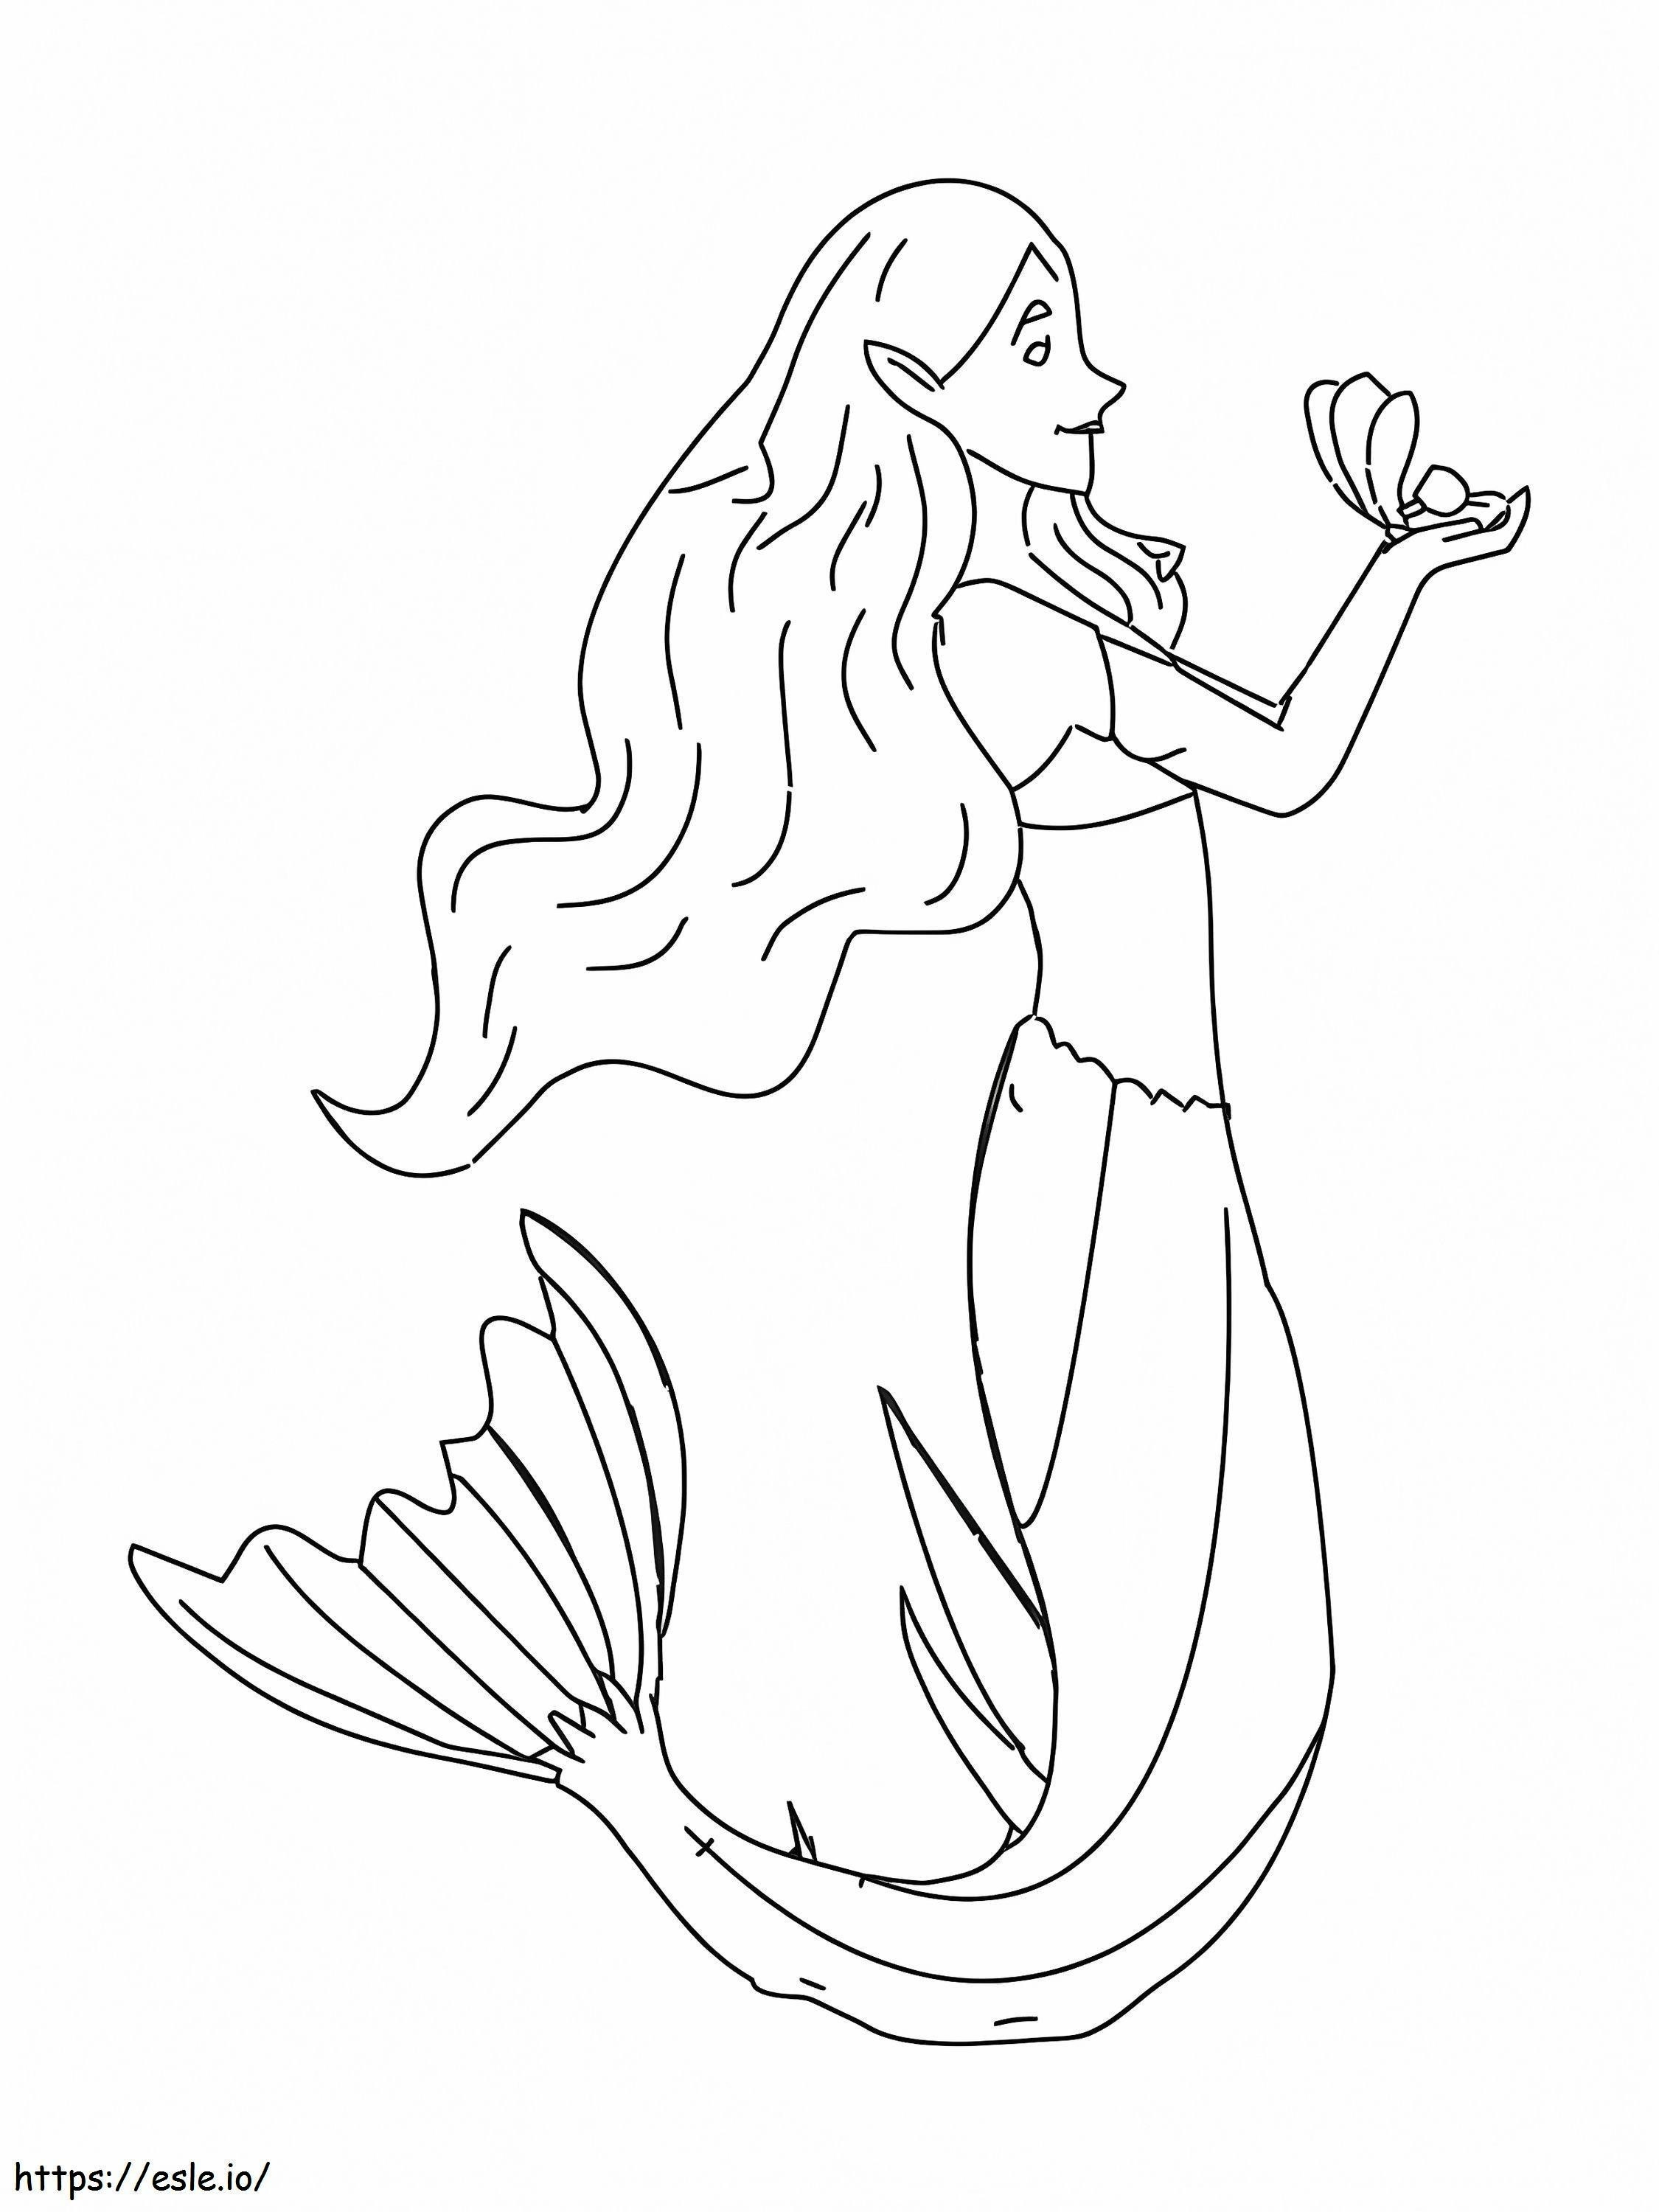 Coloriage Sirène souriante tenant une coquille à imprimer dessin